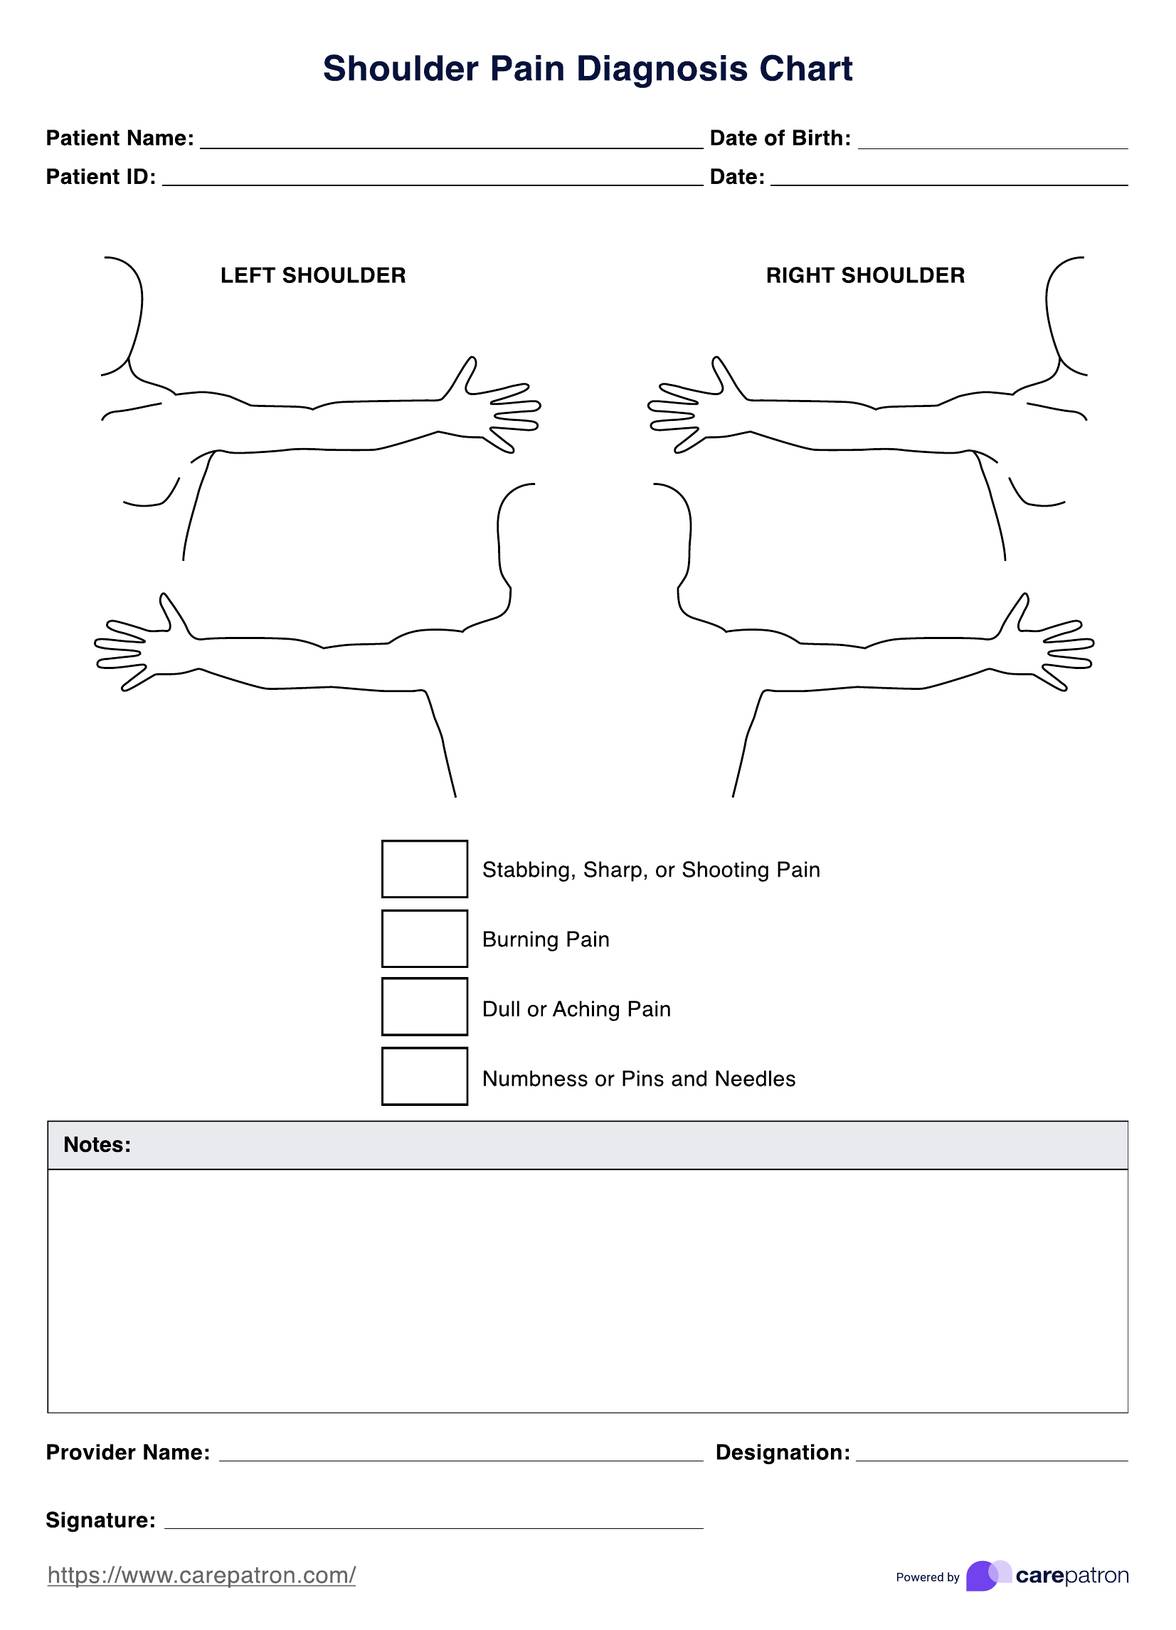 Shoulder Pain Diagnosis Chart PDF Example